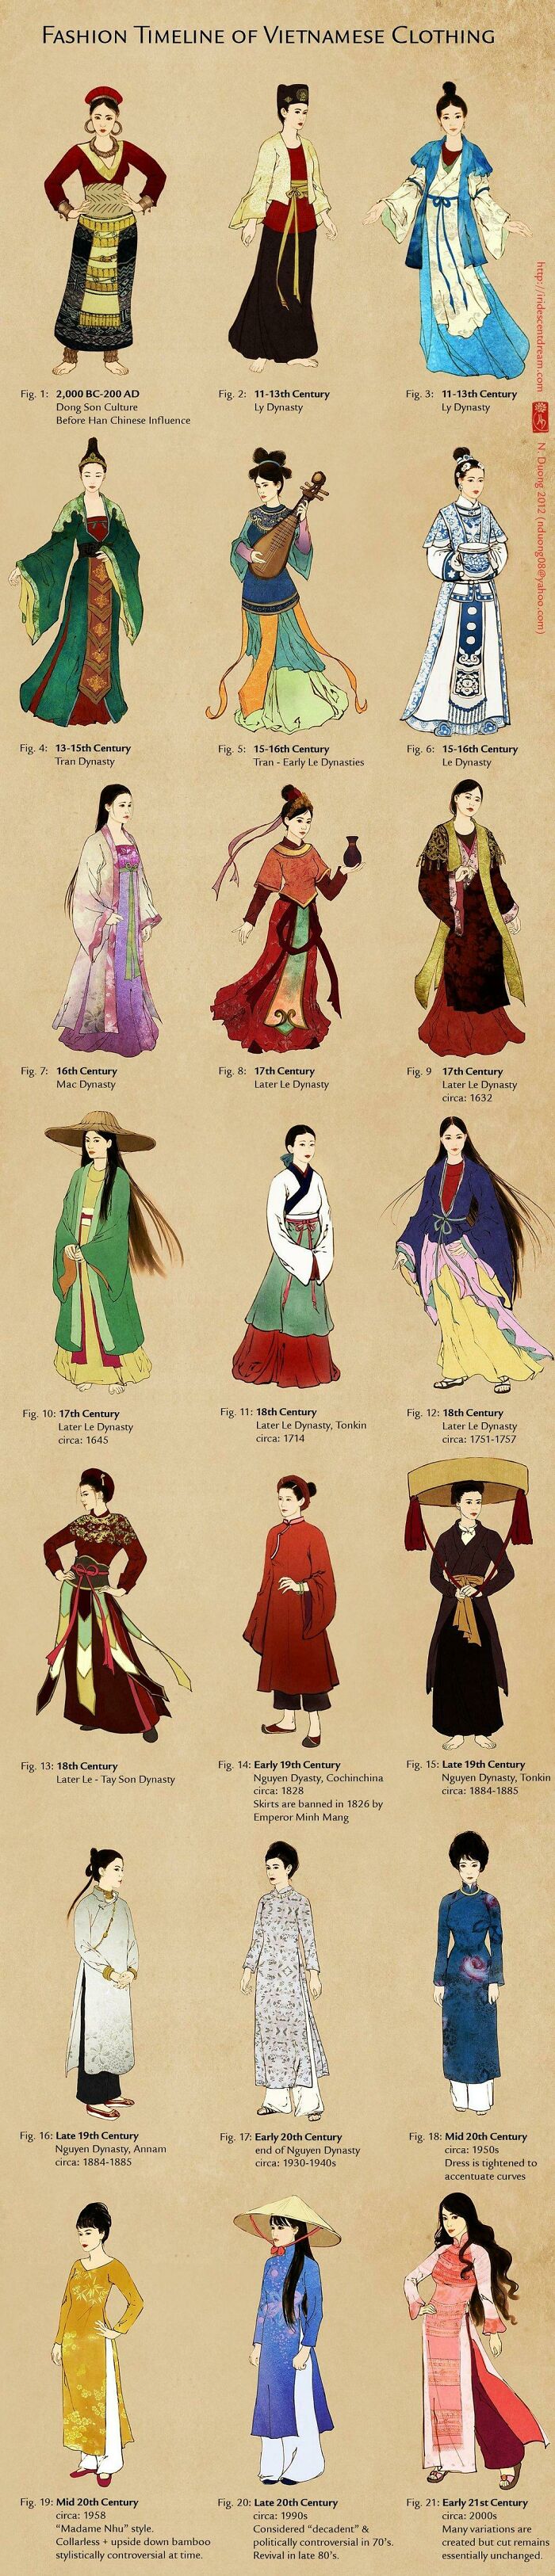 Fashion Timeline Of Vietnamese Clothing